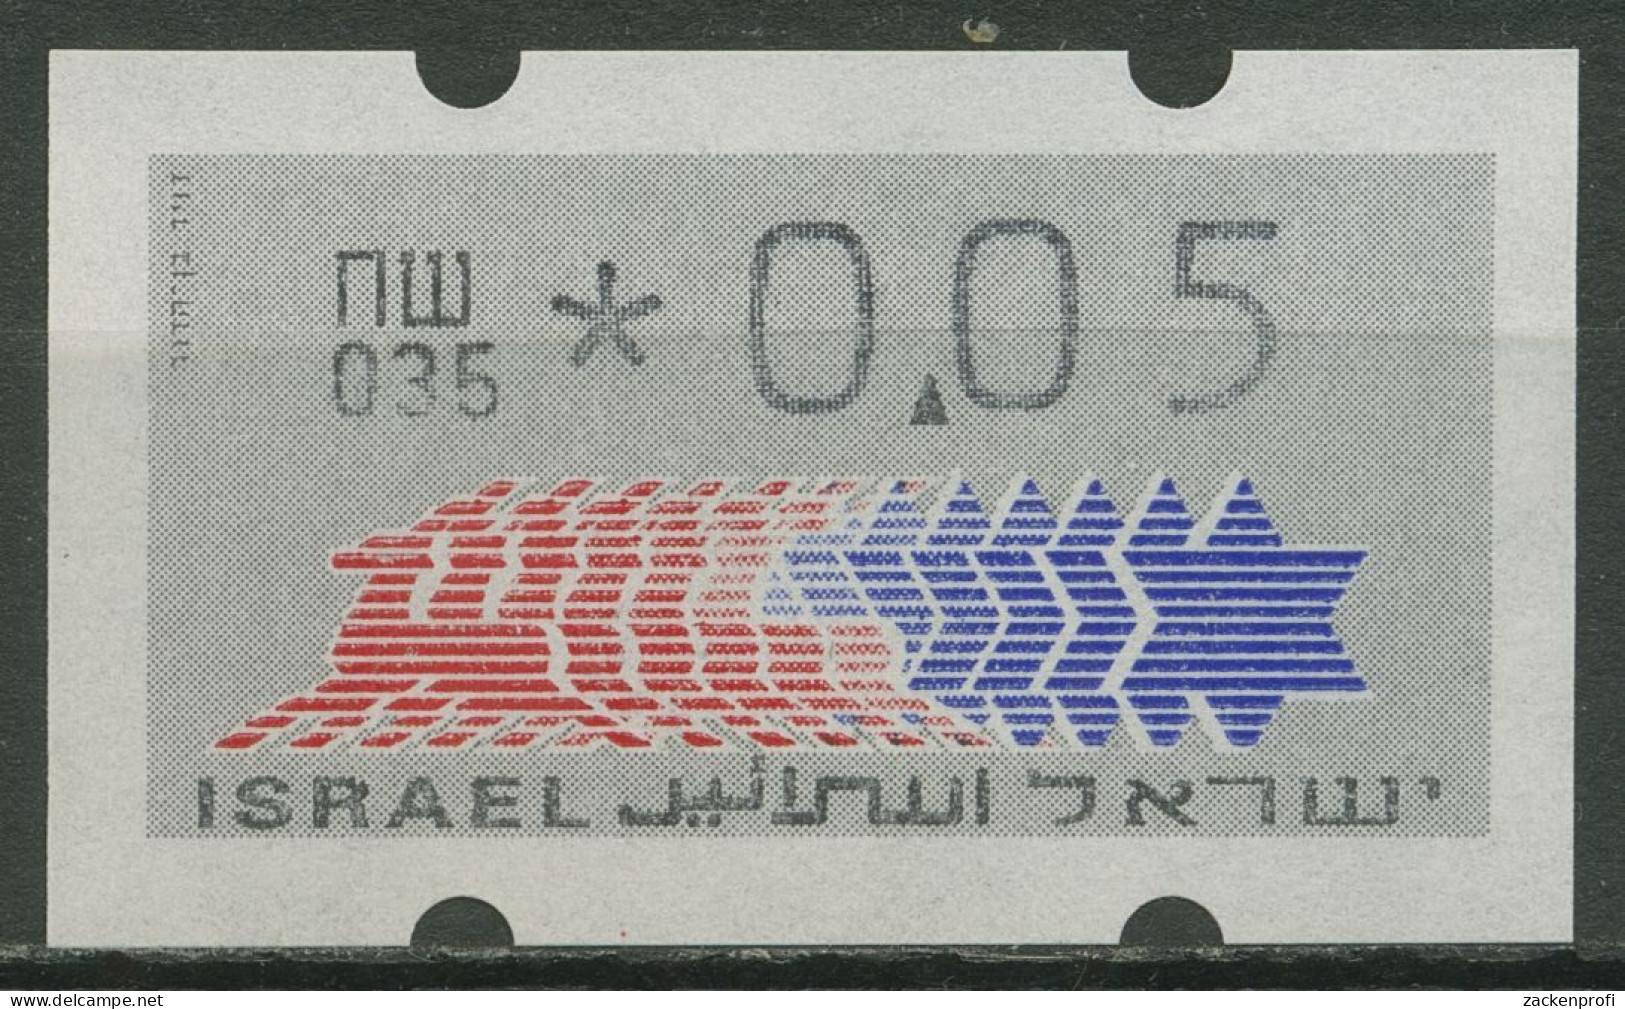 Israel ATM 1990 Hirsch Automat 035 Einzelwert ATM 3.4.35 Postfrisch - Franking Labels